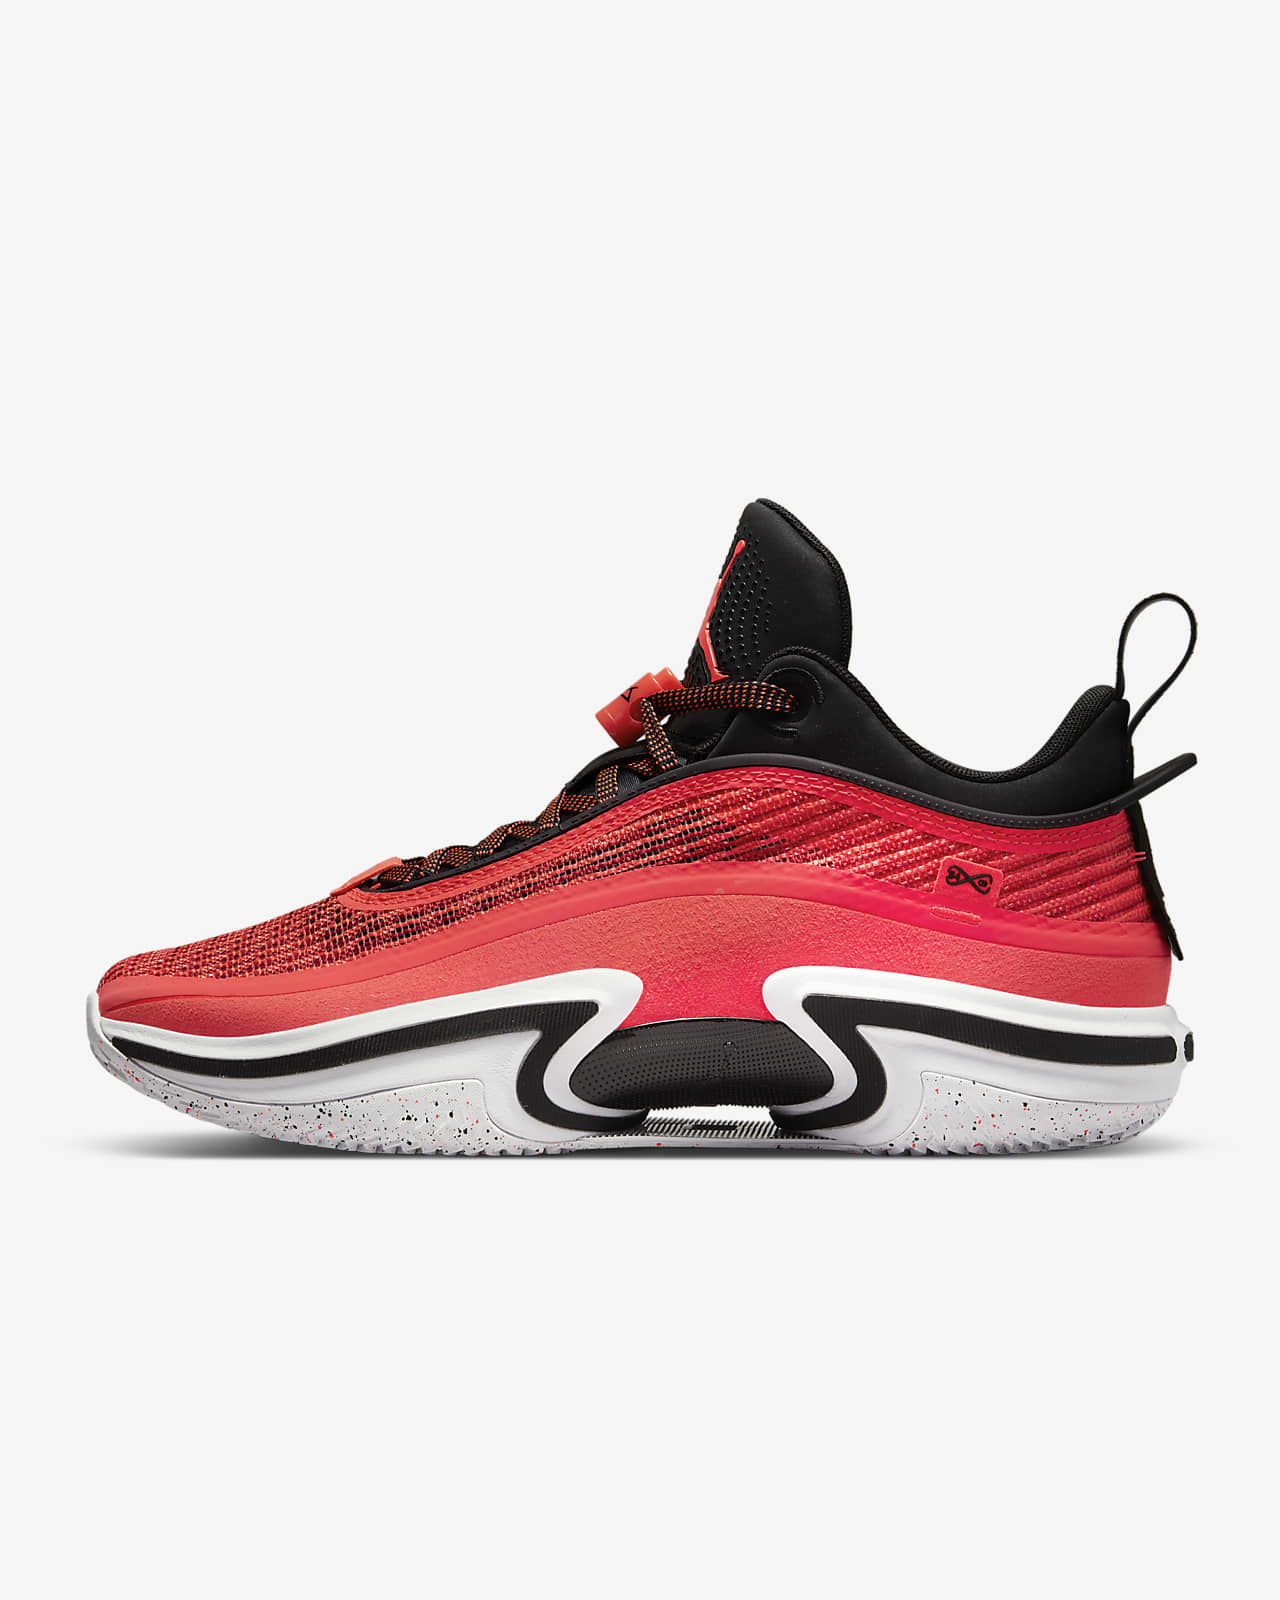 Air Jordan XXXVI Low ‘Infrared 23’